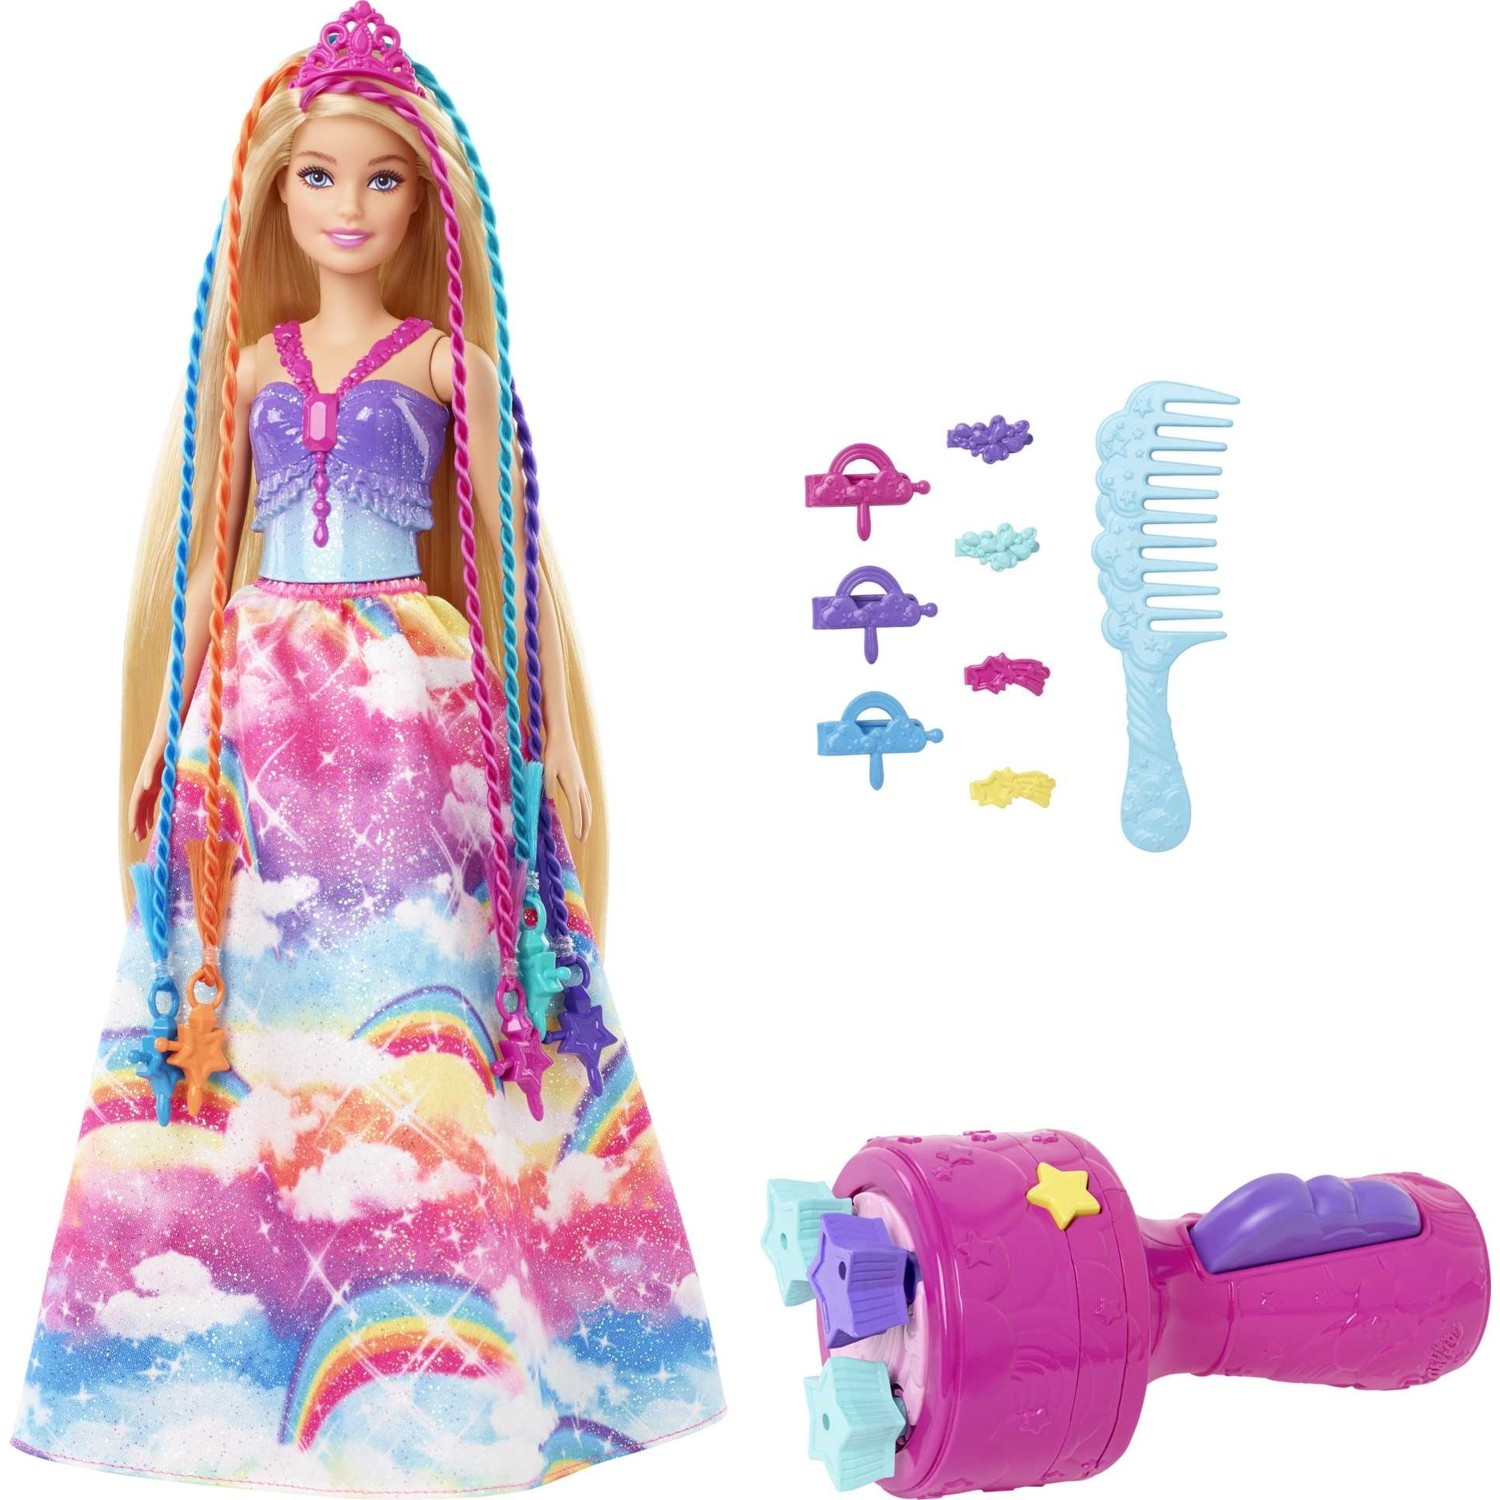 Кукла Barbie Dreamtopia Braided Princess GTG00 кукла barbie дримтопия с аксессуарами 30 3 см gtg00 фиолетовый